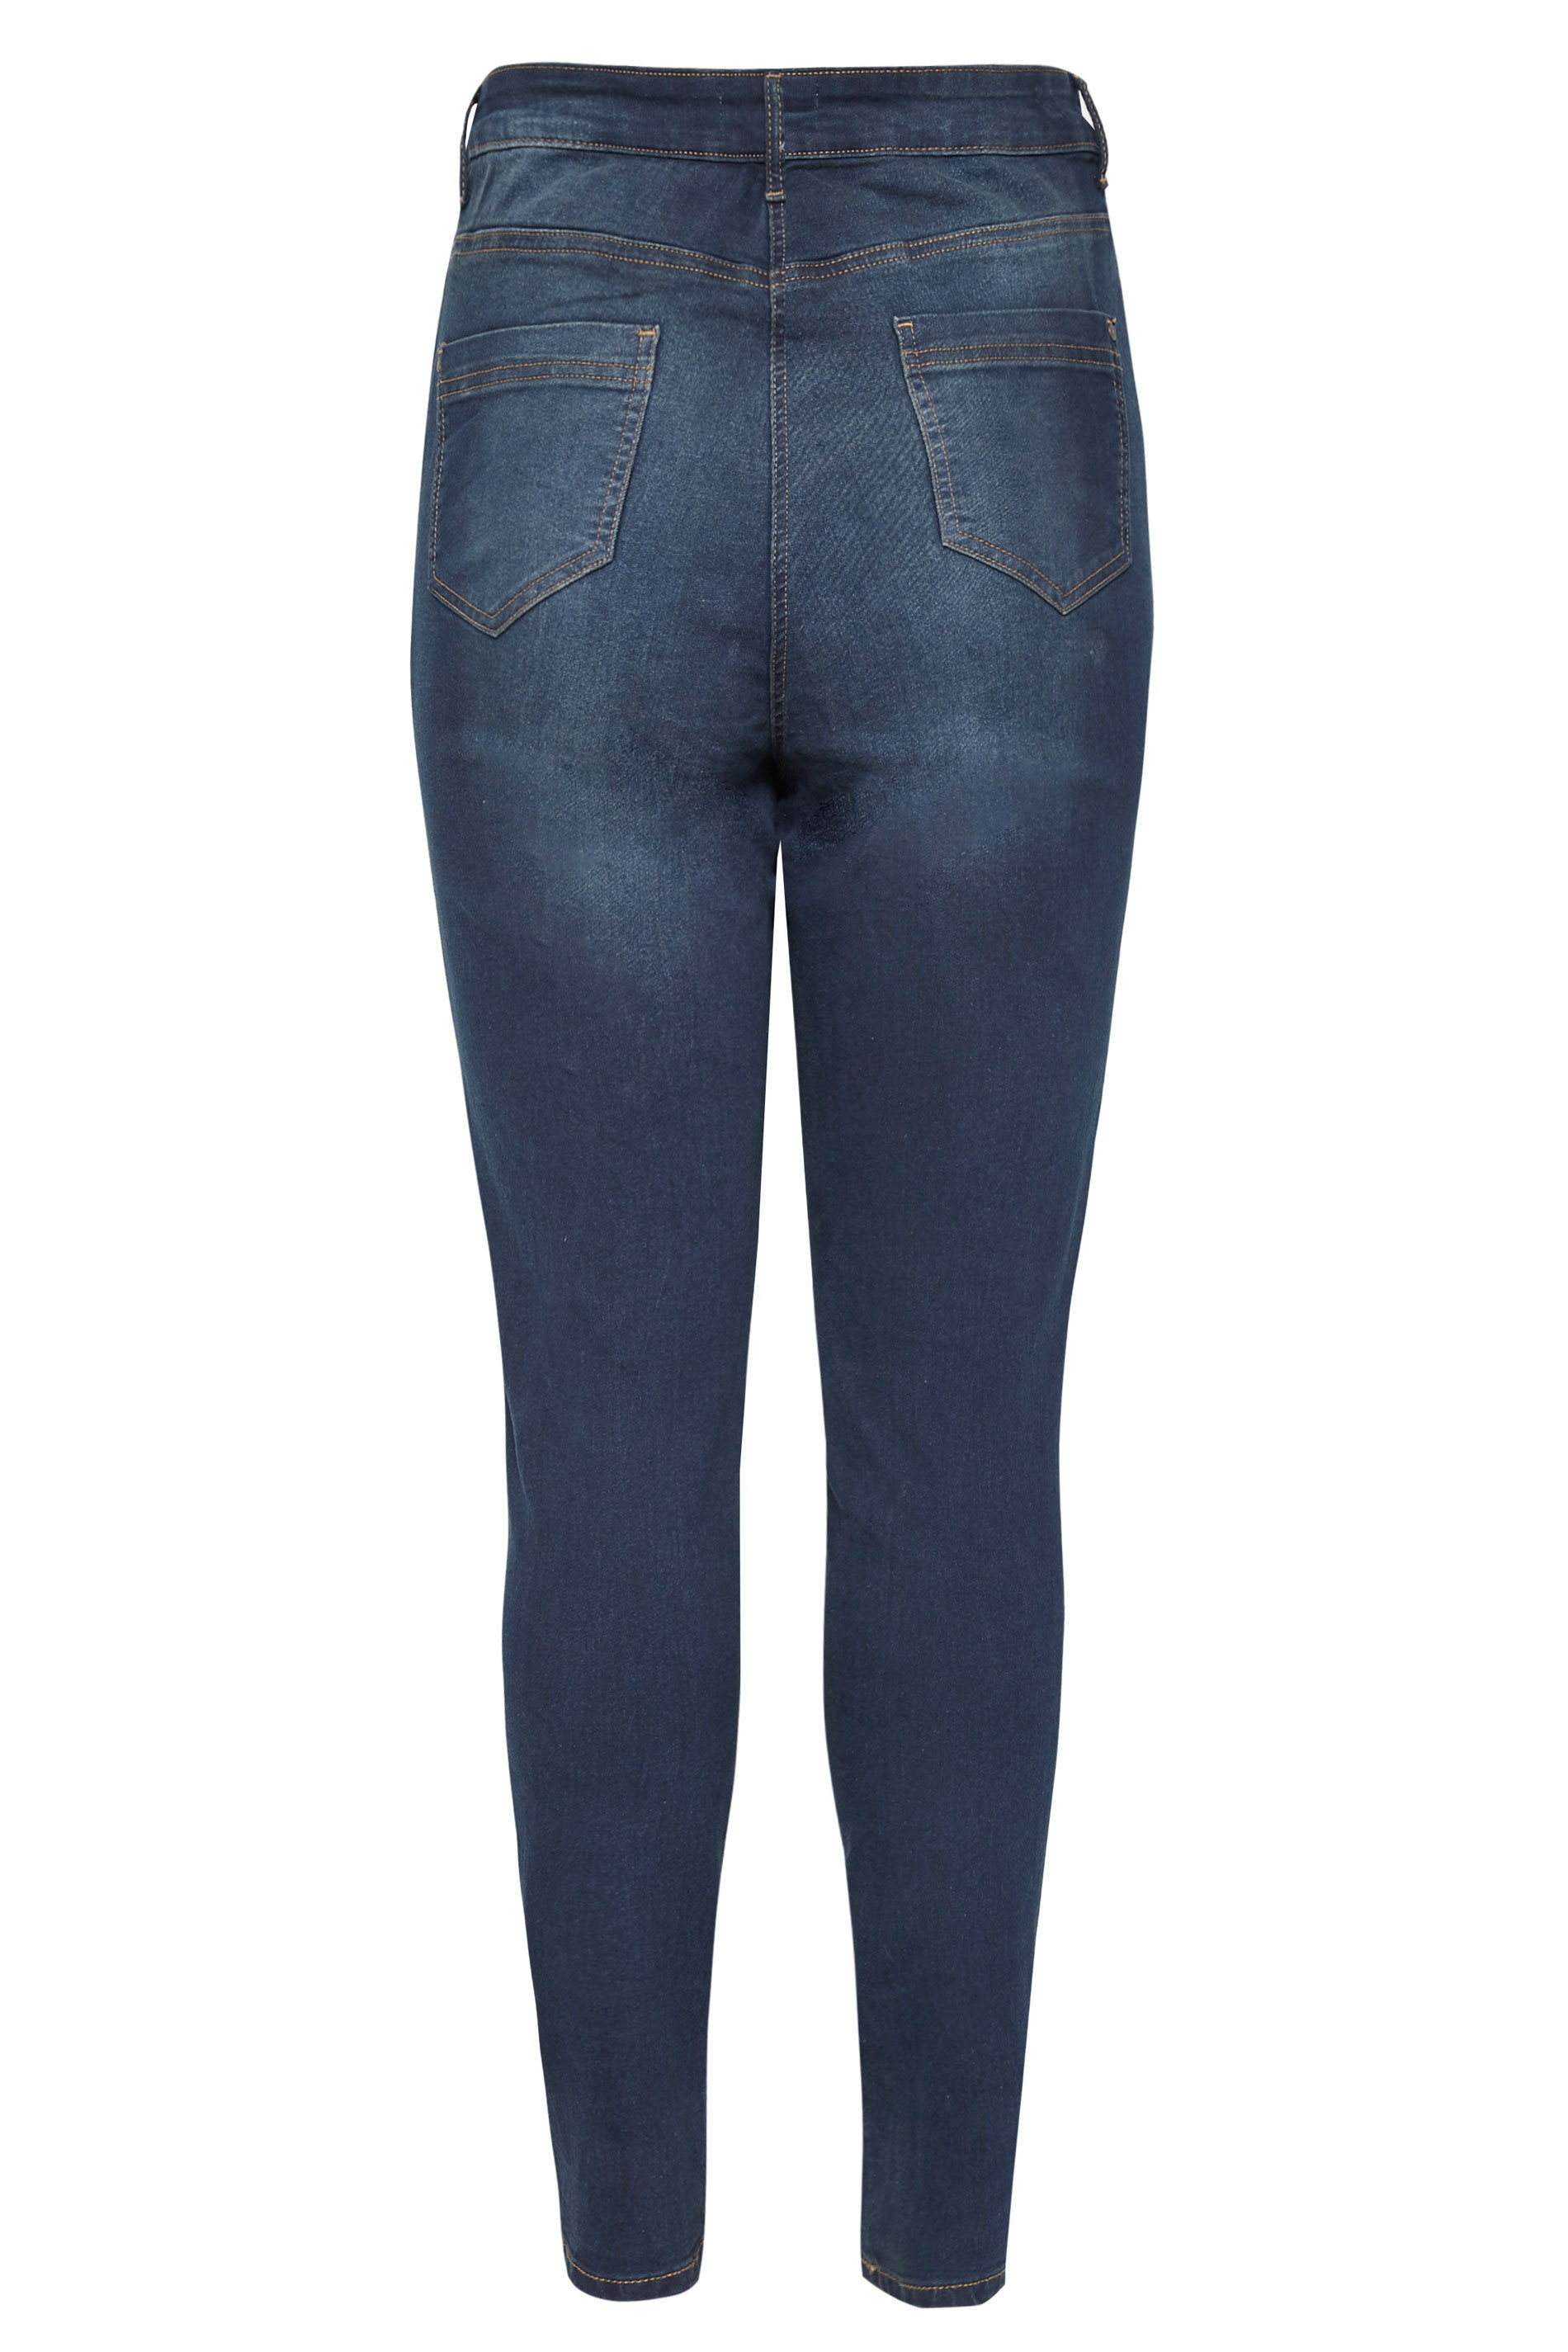 LTS Indigo Blue Skinny Stretch AVA Jeans | Long Tall Sally